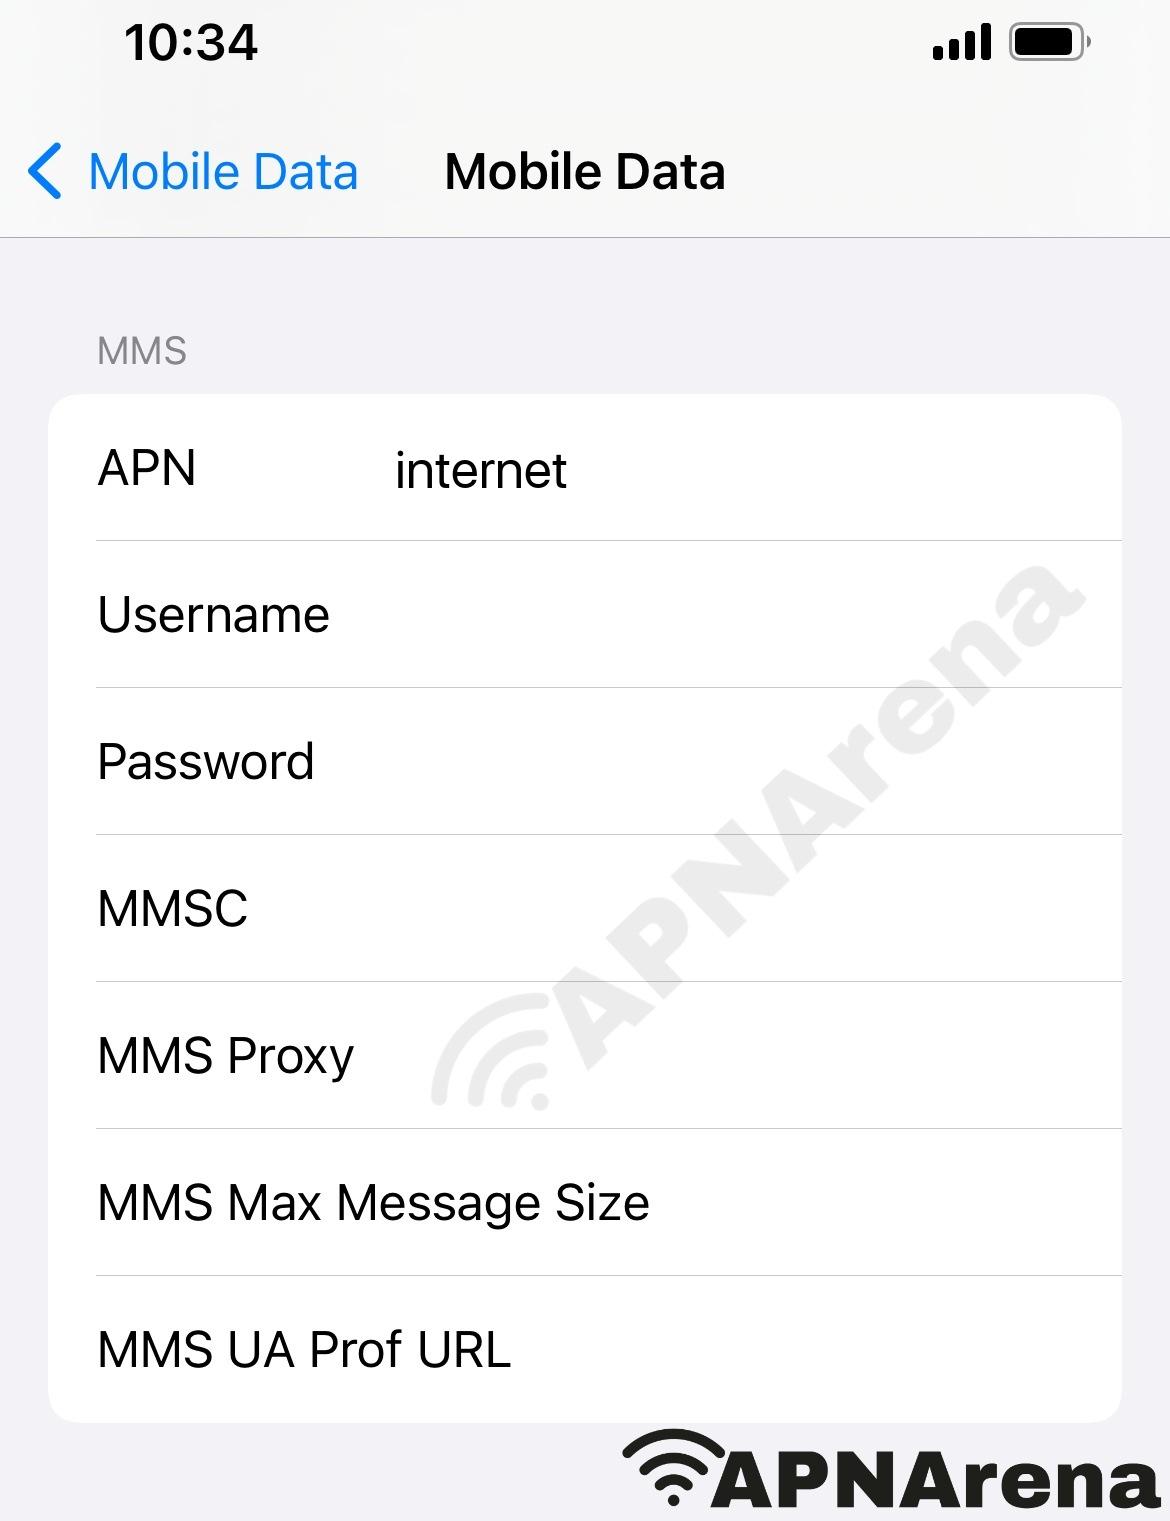 Inkacel (Virgin mobile) MMS Settings for iPhone